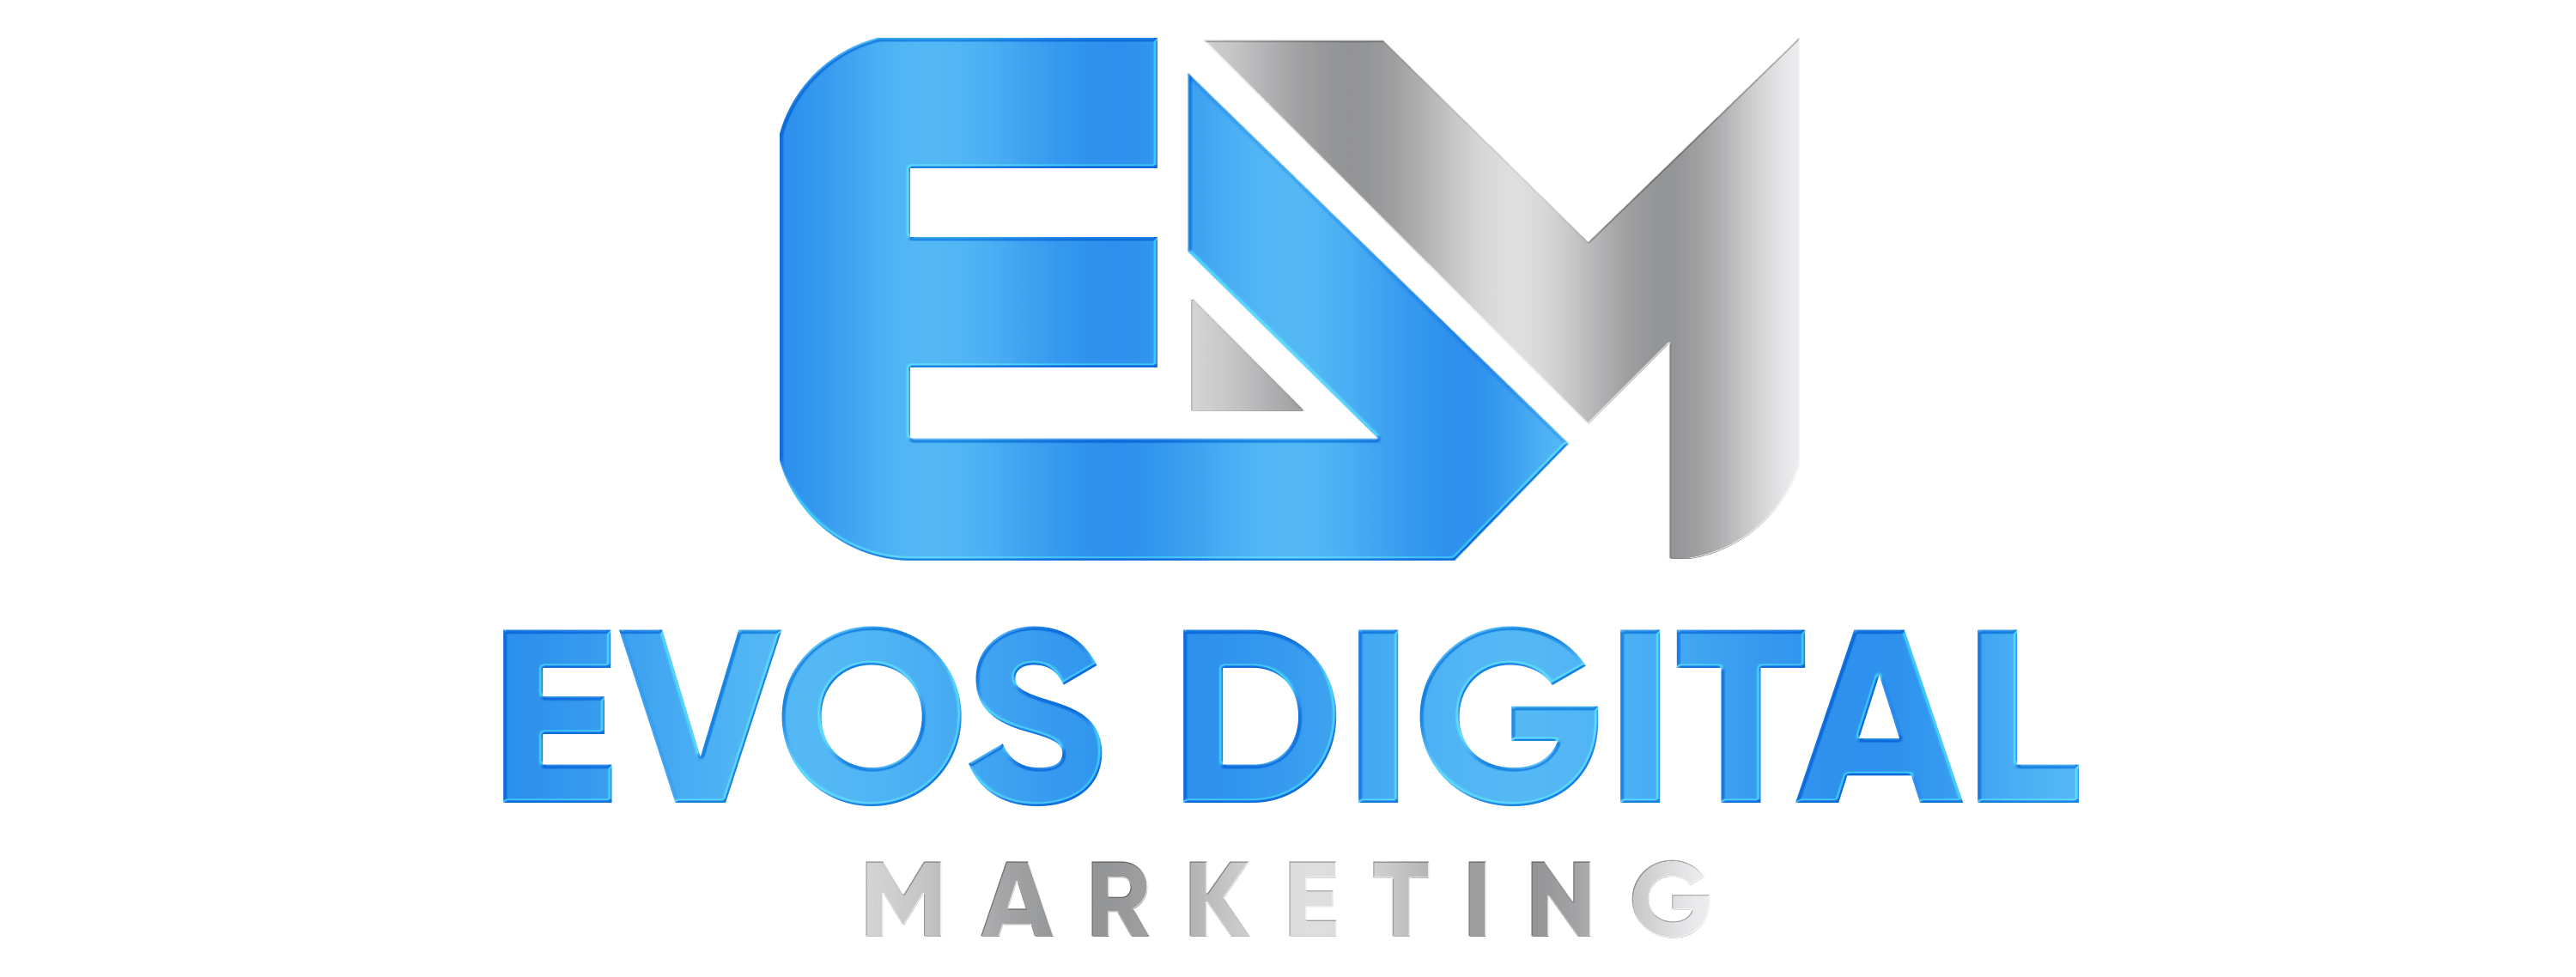 EVOS Digital Marketing Coupons and Promo Code